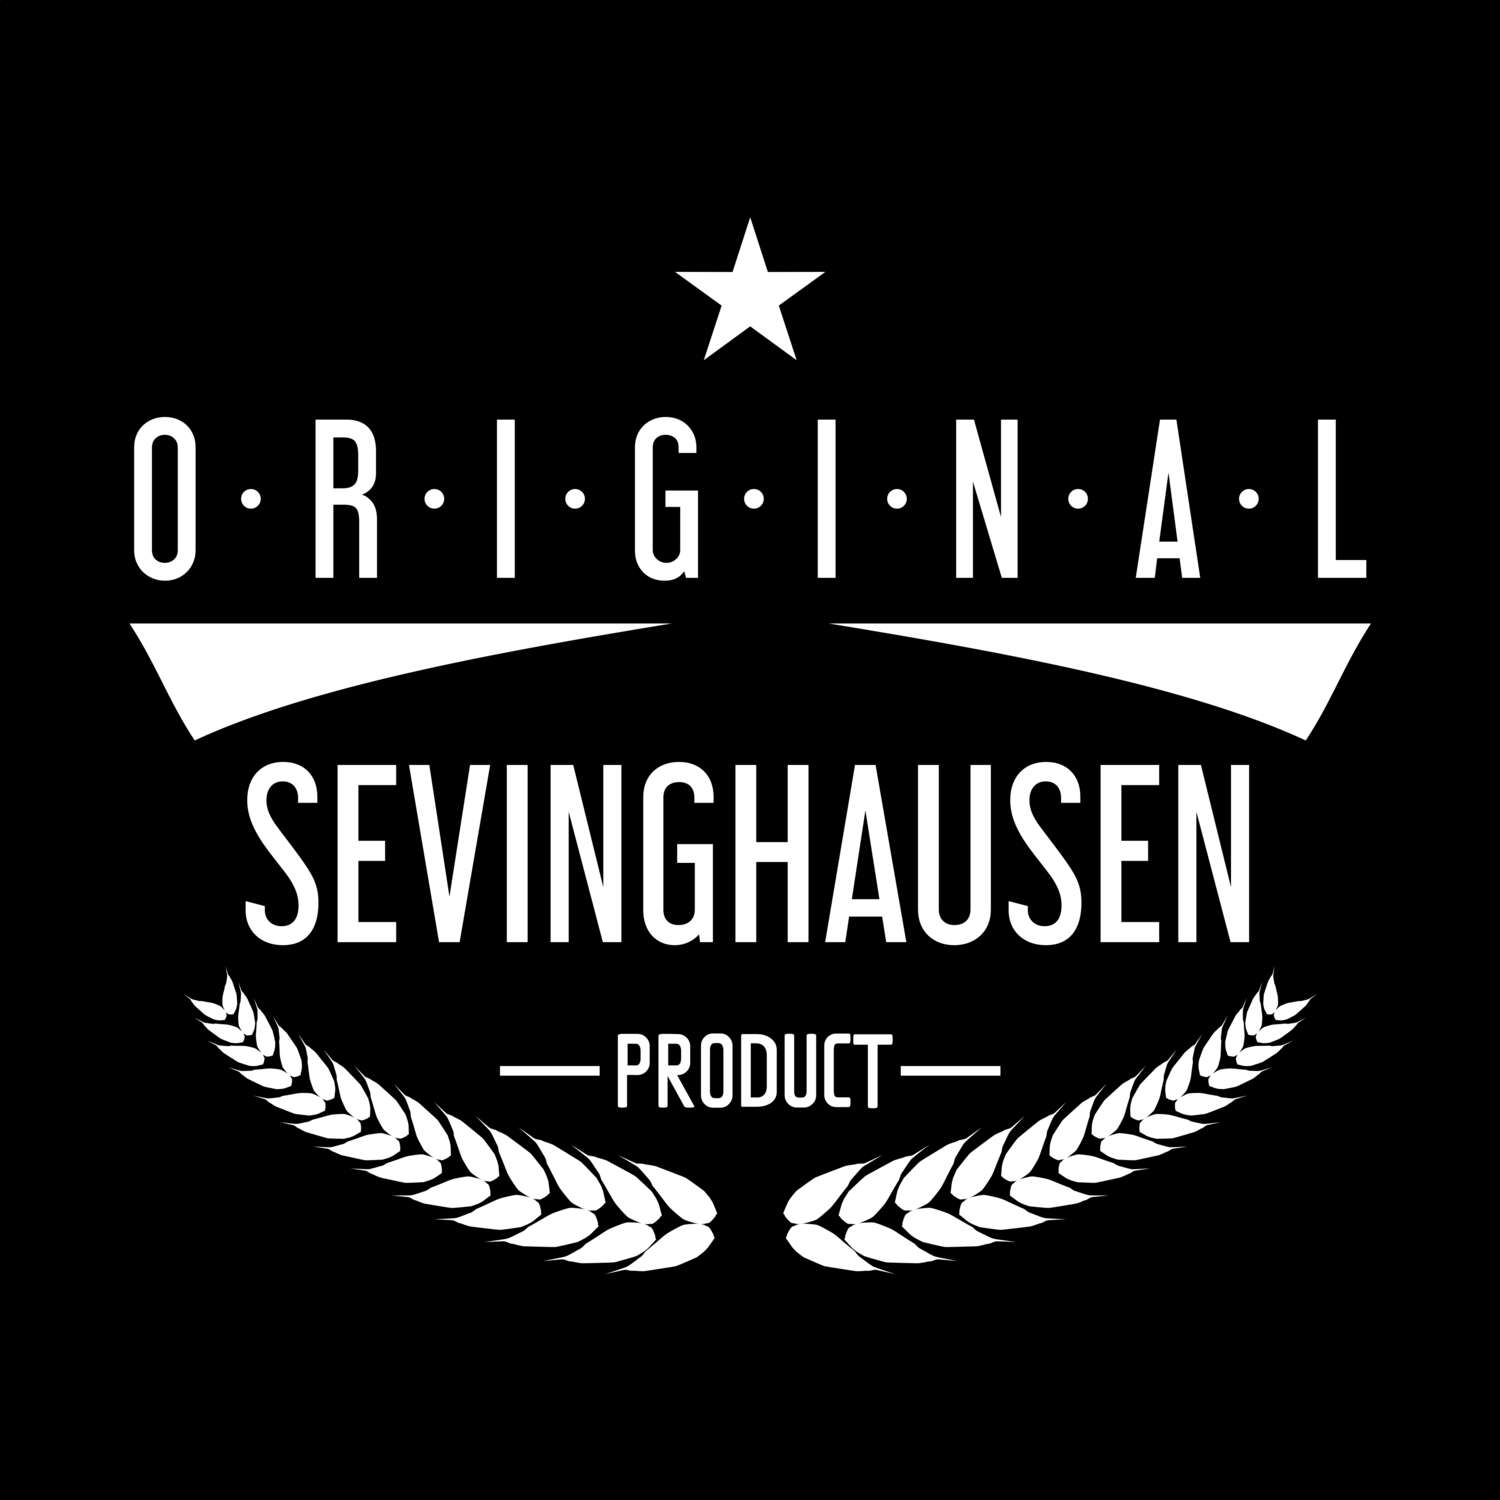 Sevinghausen T-Shirt »Original Product«